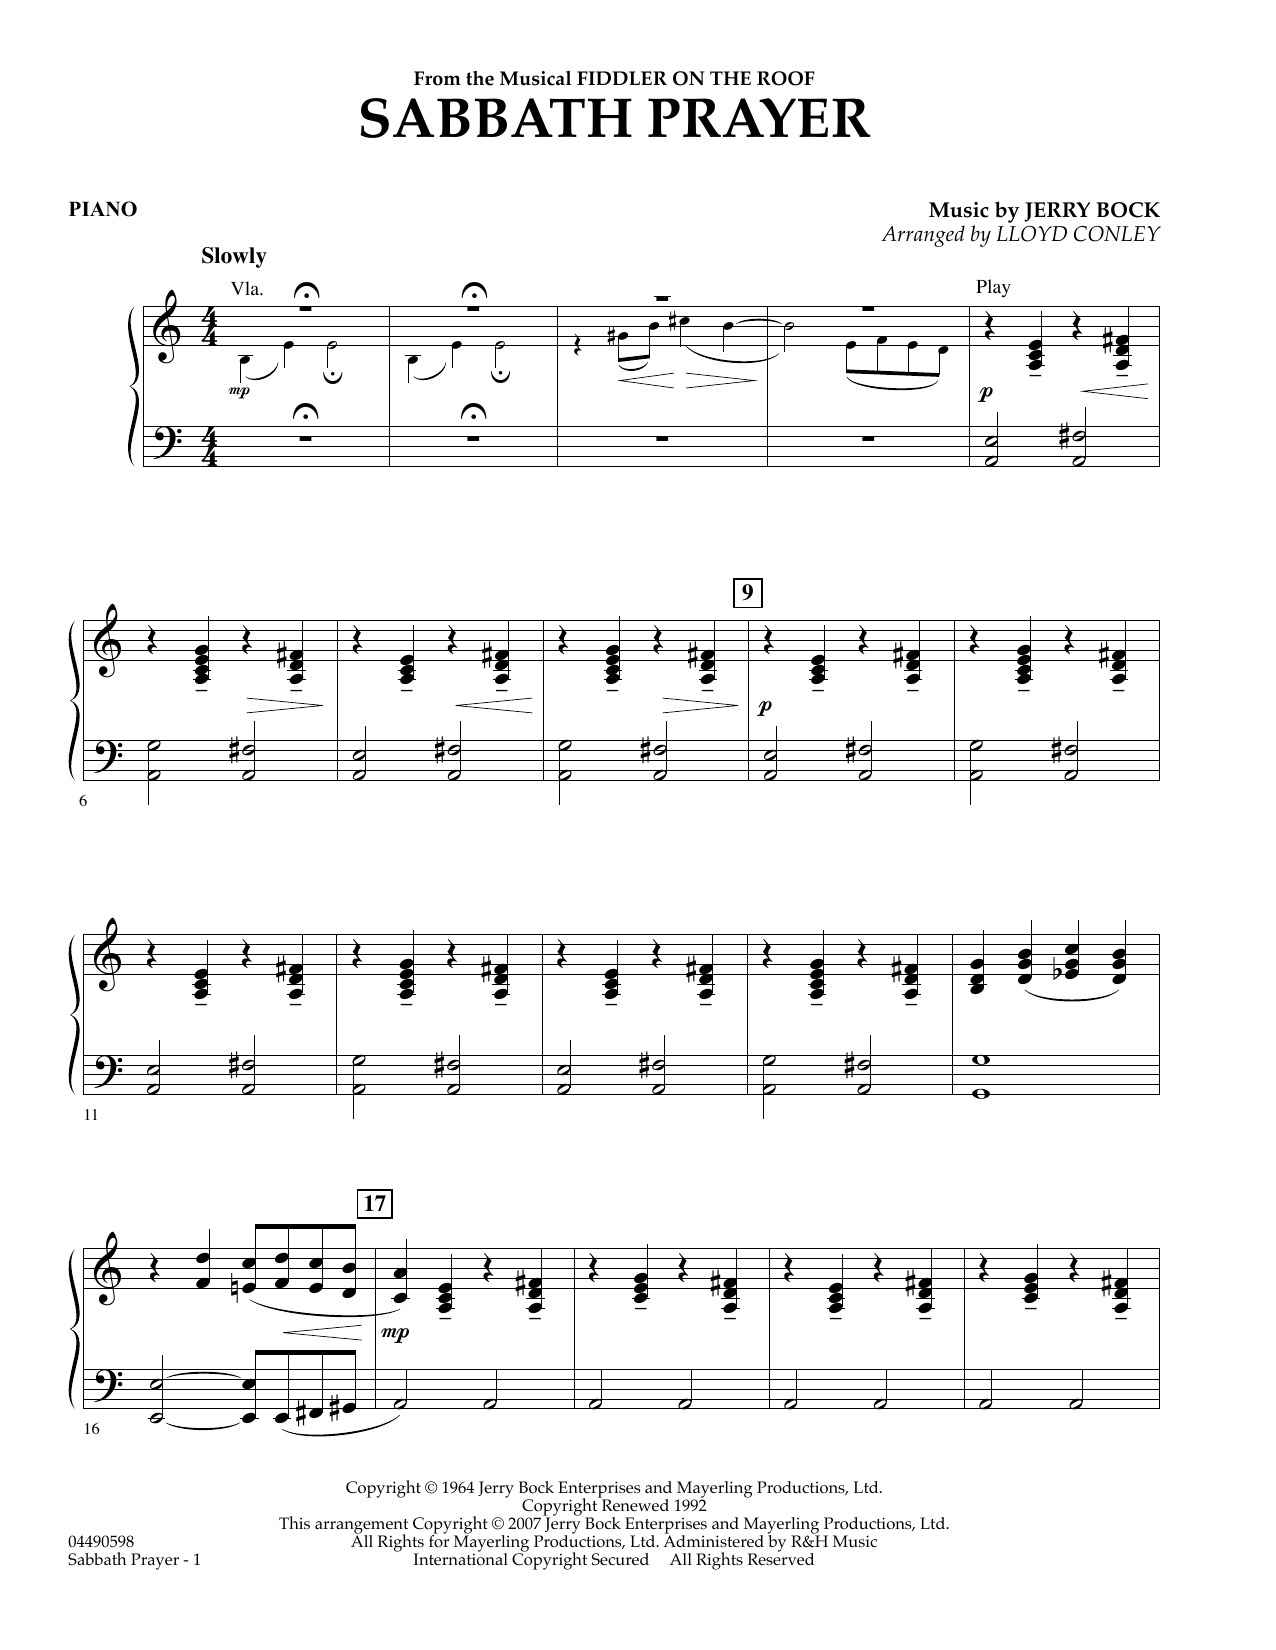 Lloyd Conley Sabbath Prayer - Piano sheet music notes and chords arranged for Orchestra